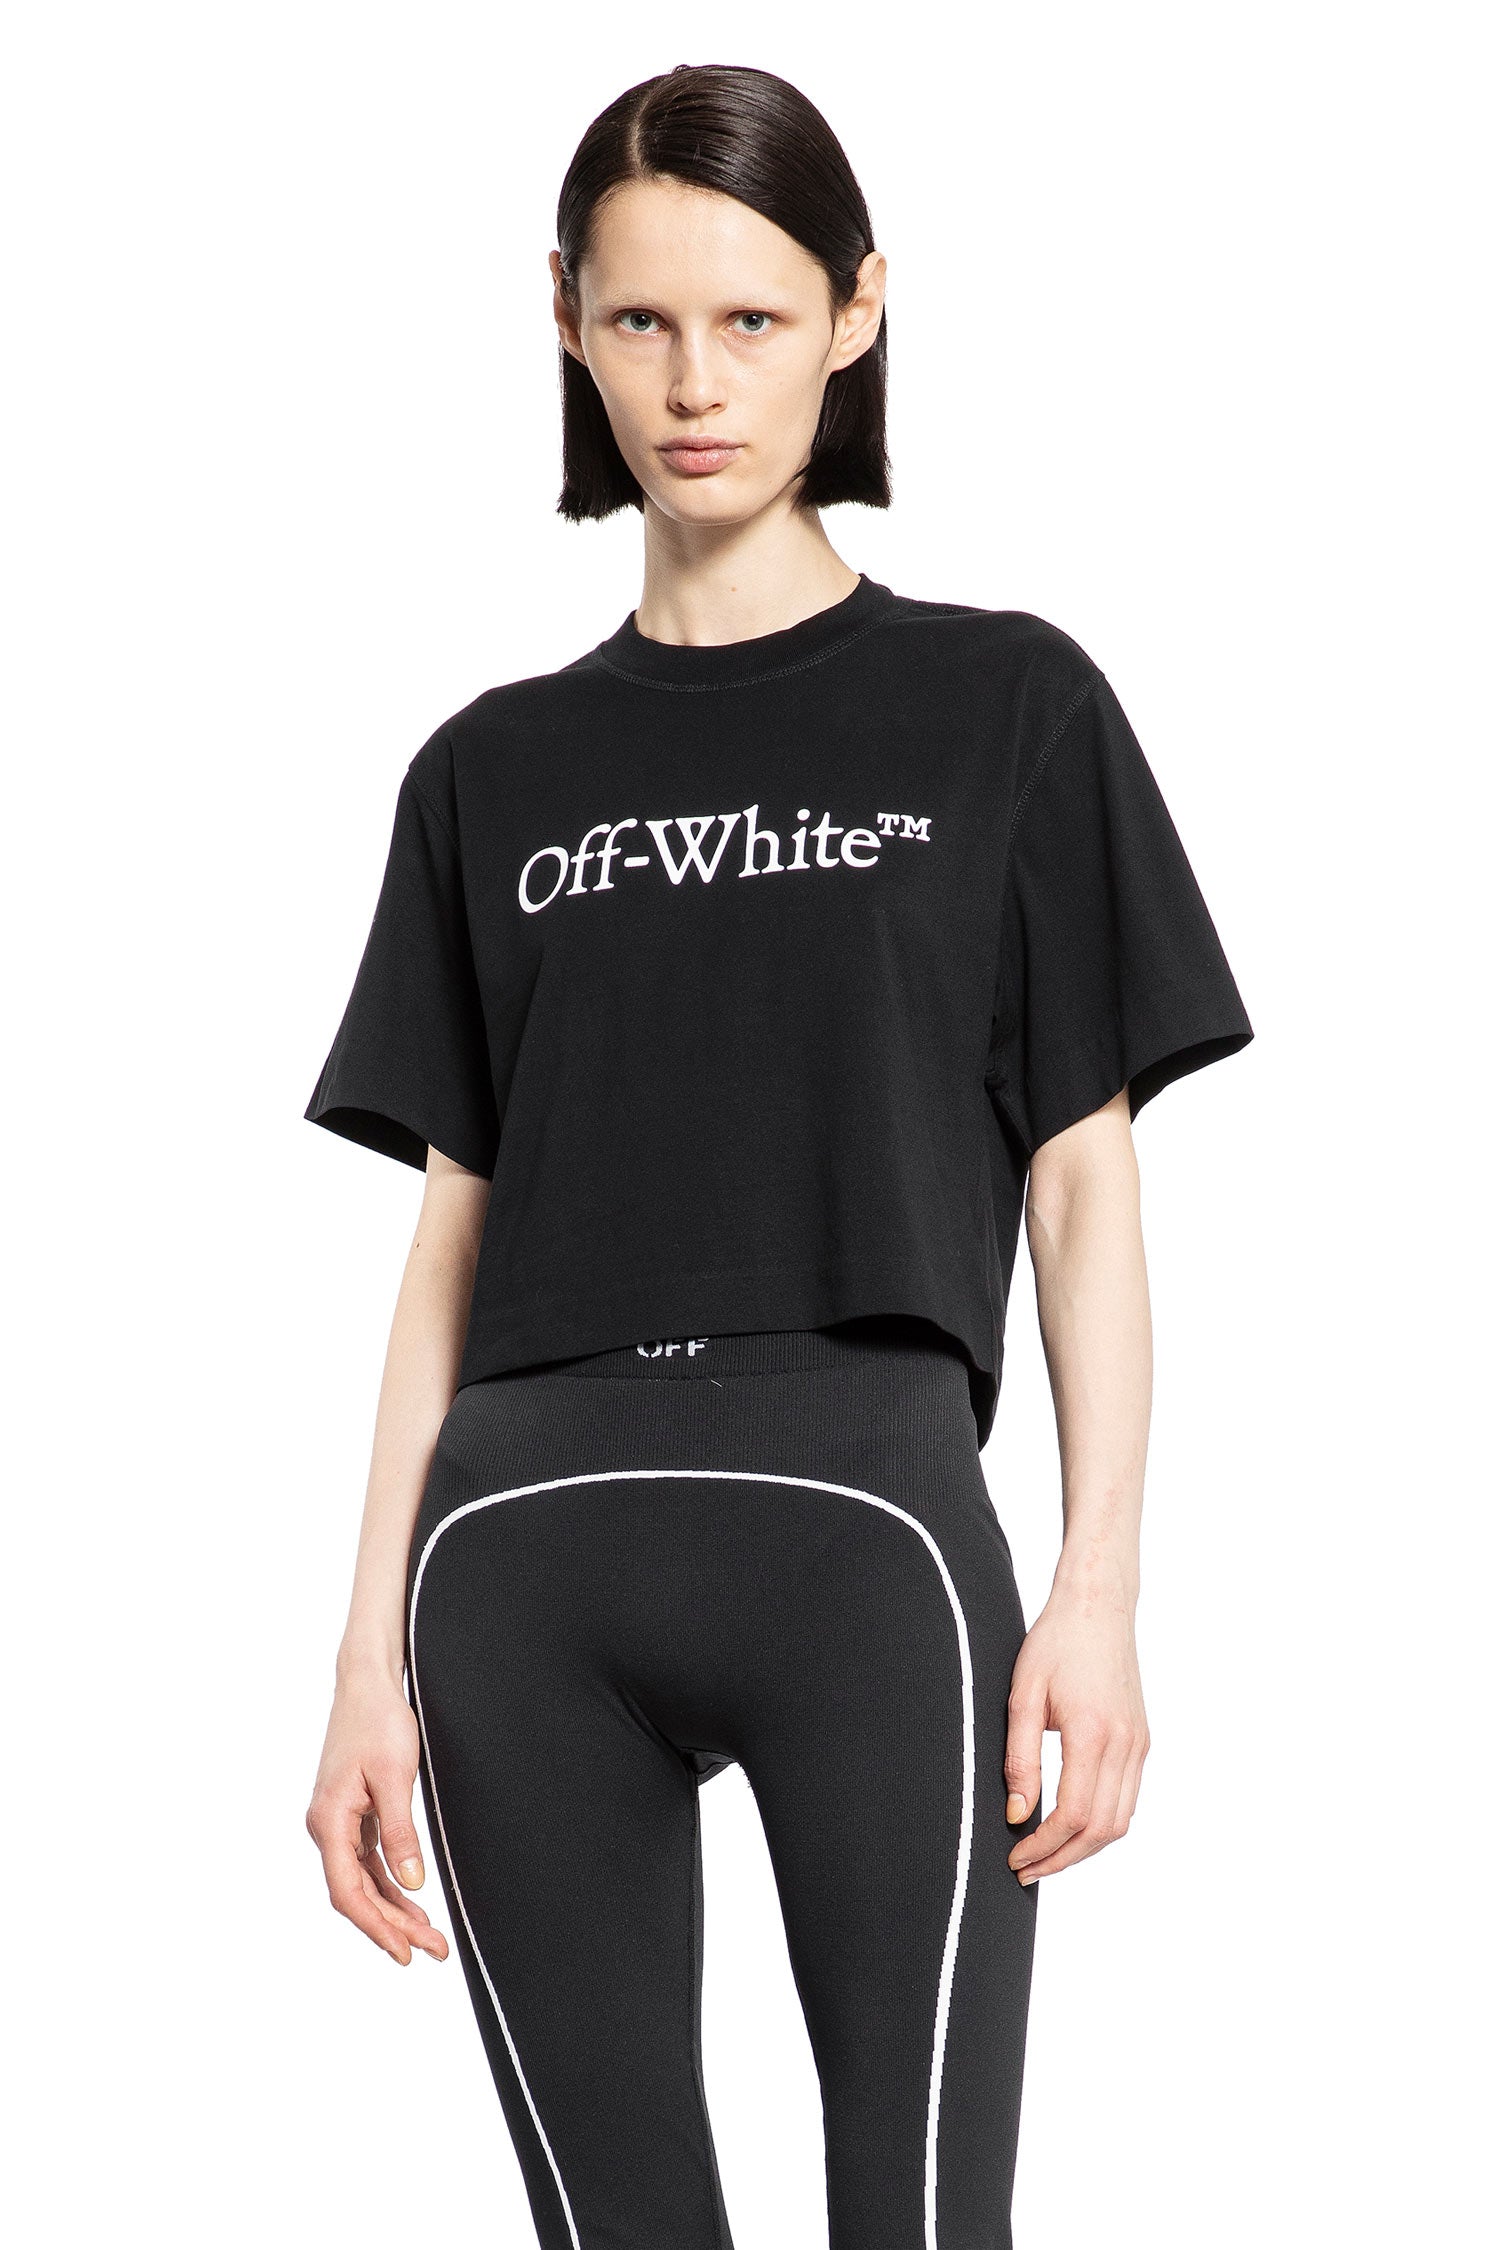 OFF-WHITE WOMAN BLACK T-SHIRTS